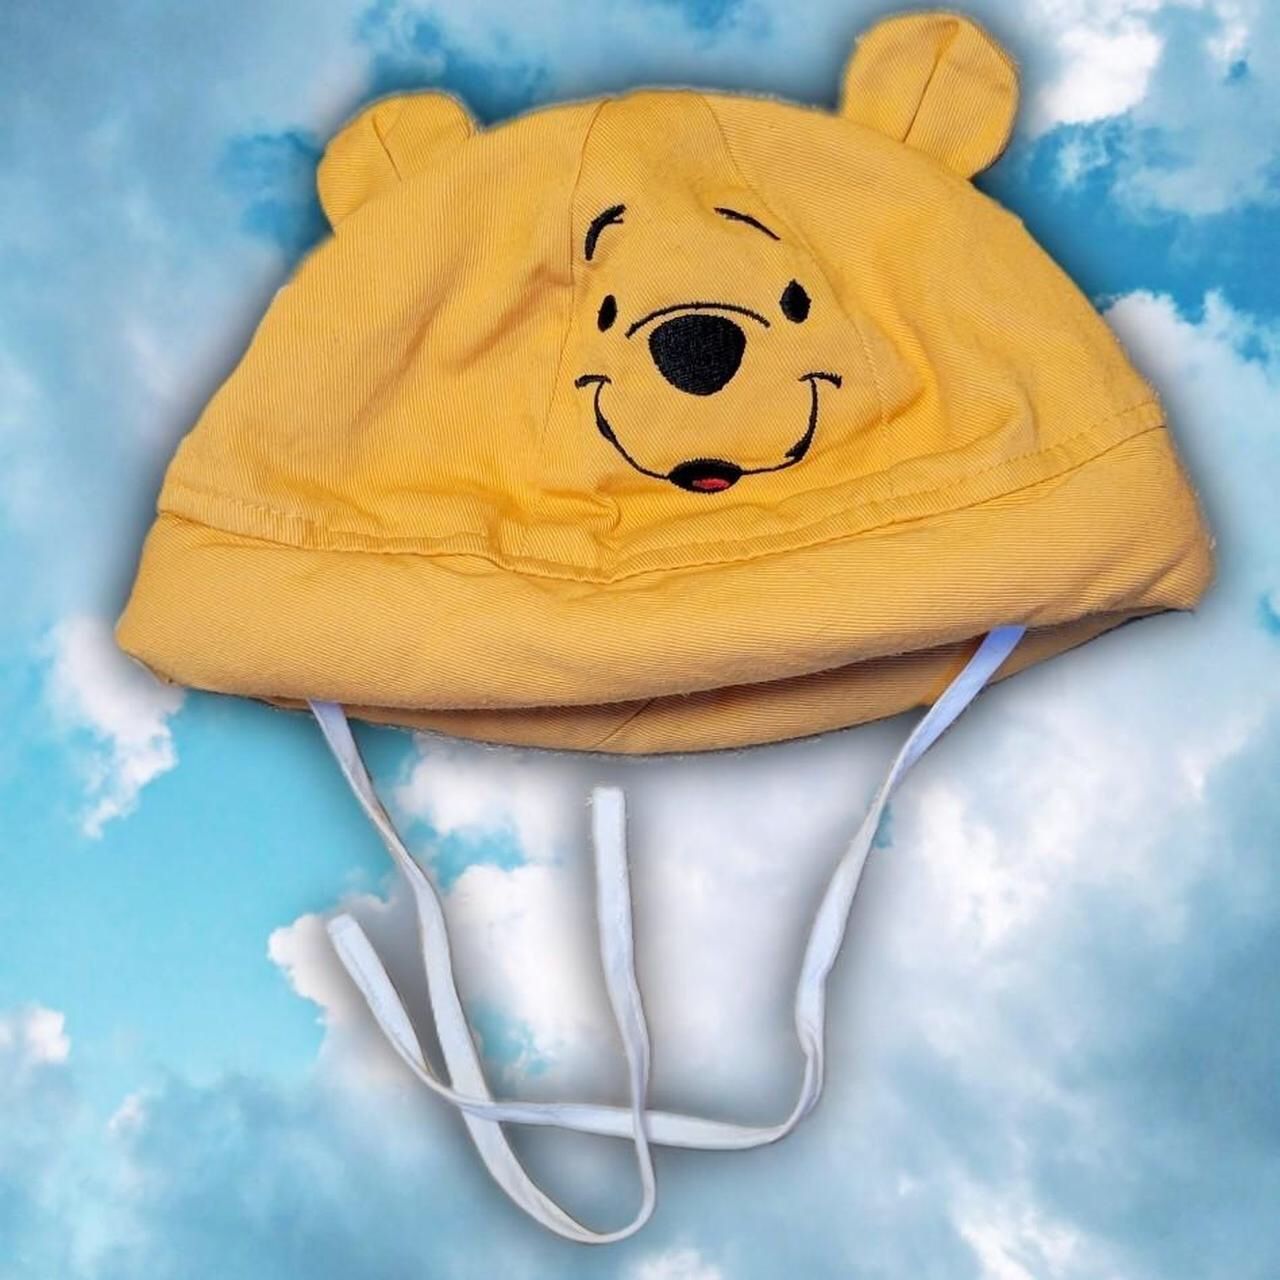 Vintage original Disney Winnie the Pooh infant hat